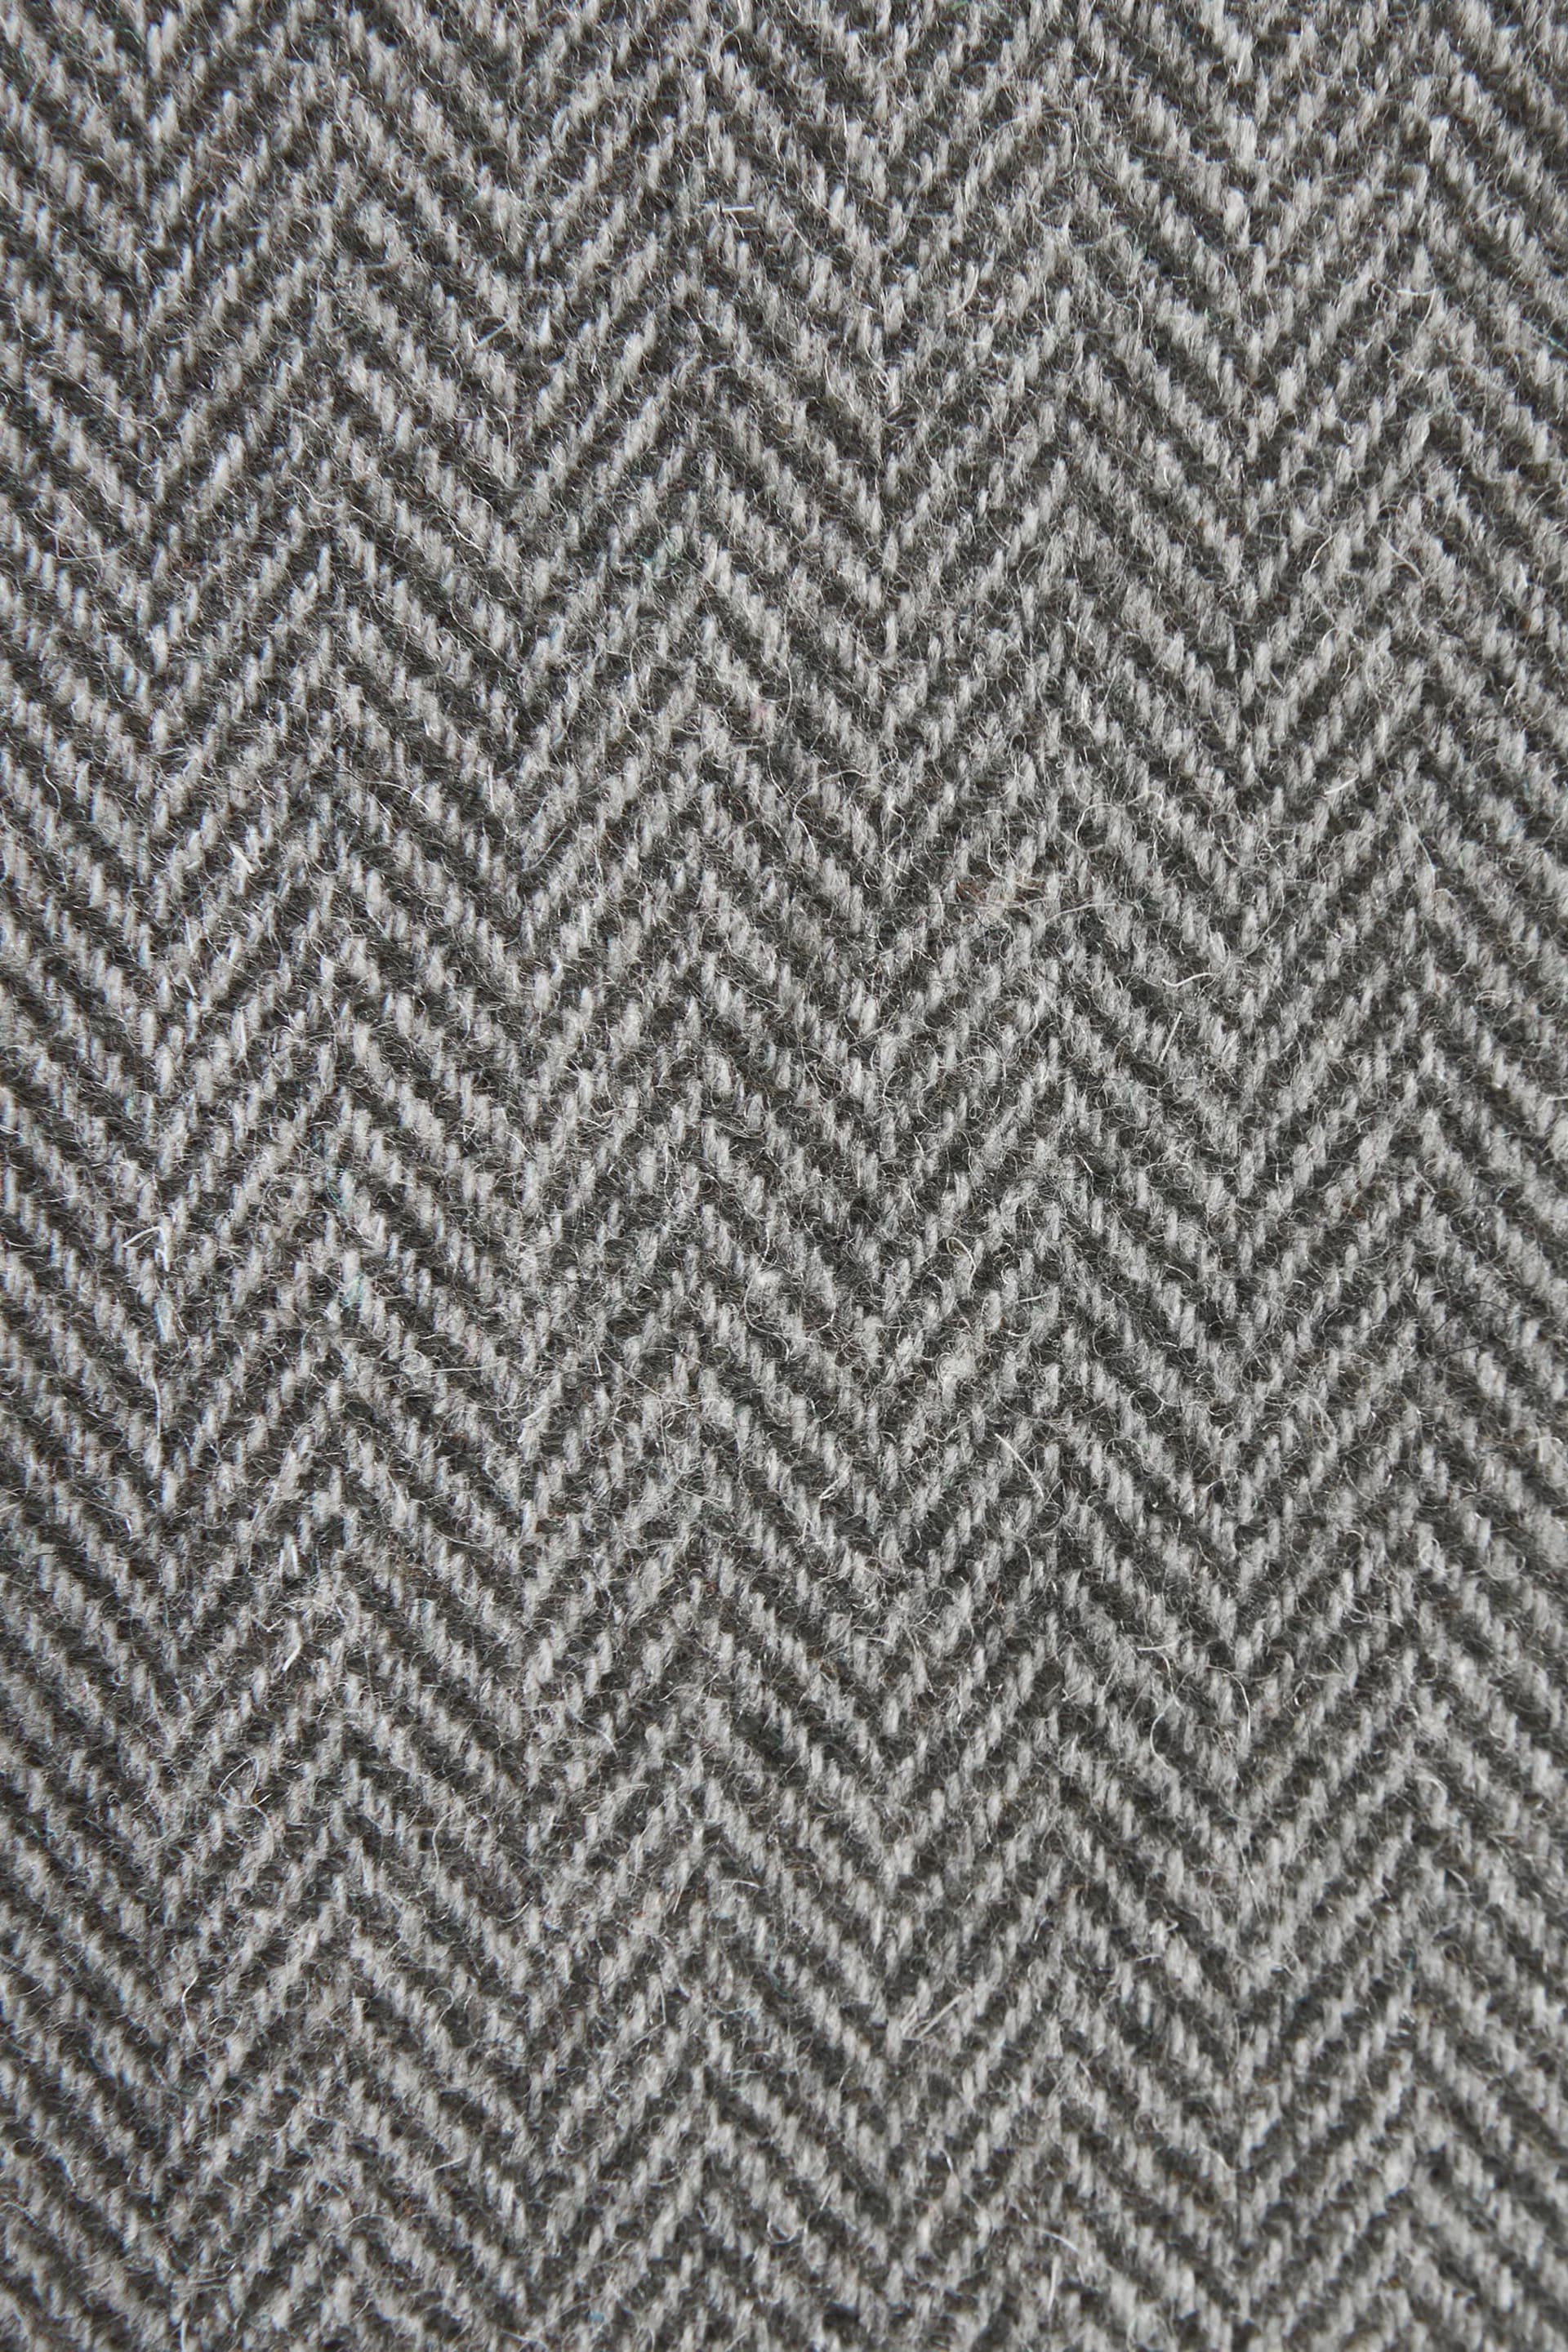 Sage Green Nova Fides Wool Blend Herringbone Suit Trousers - Image 6 of 9